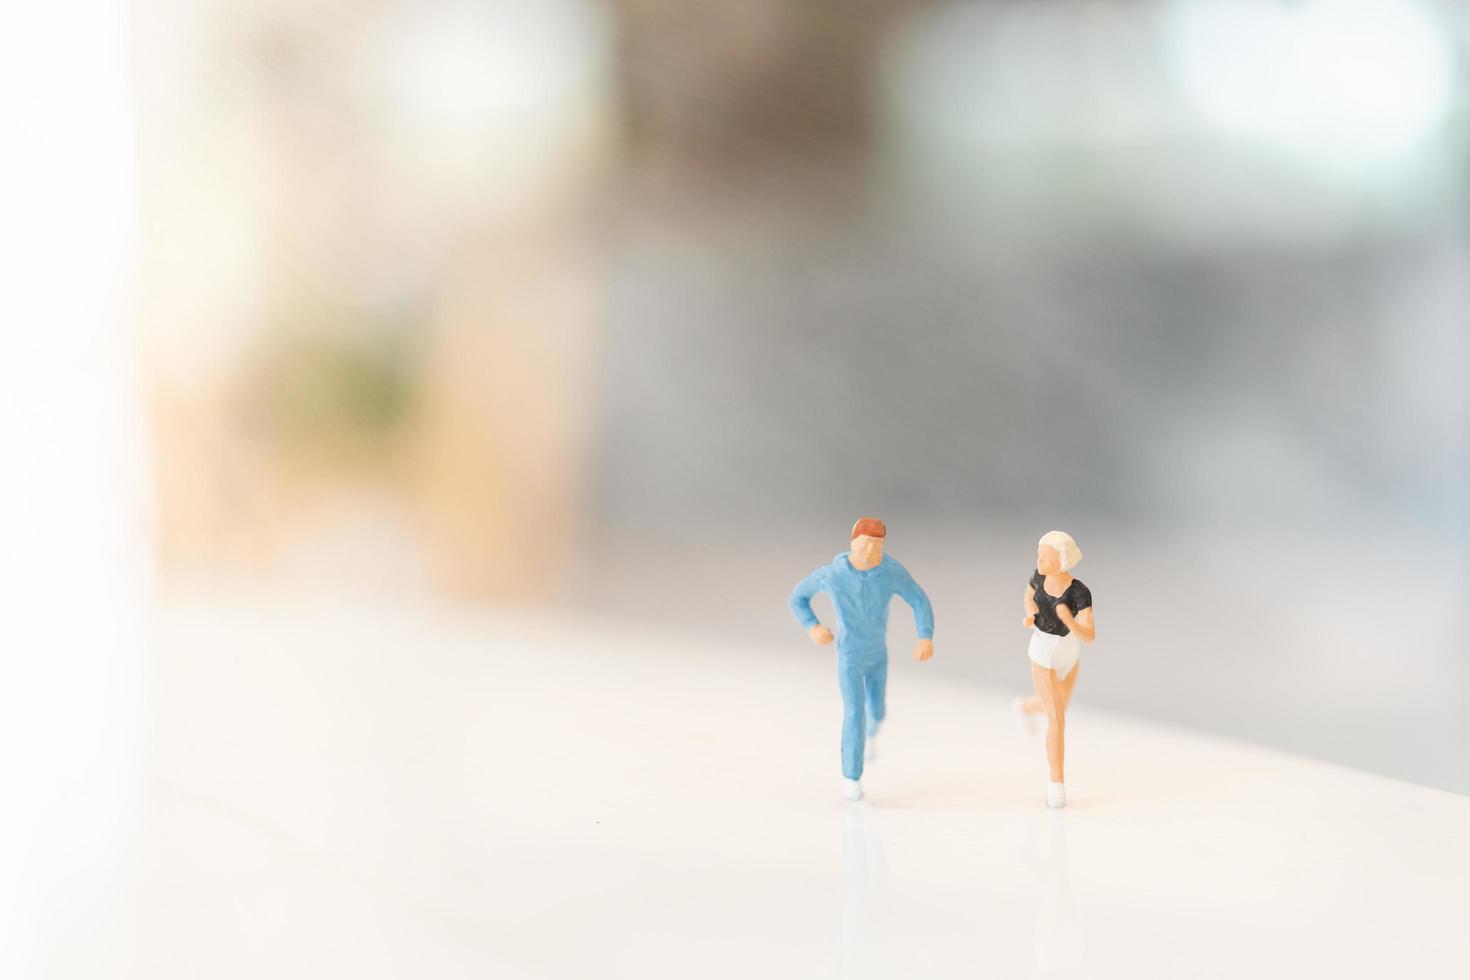 miniatuur rennende mensen, gezondheids- en sportconcept foto